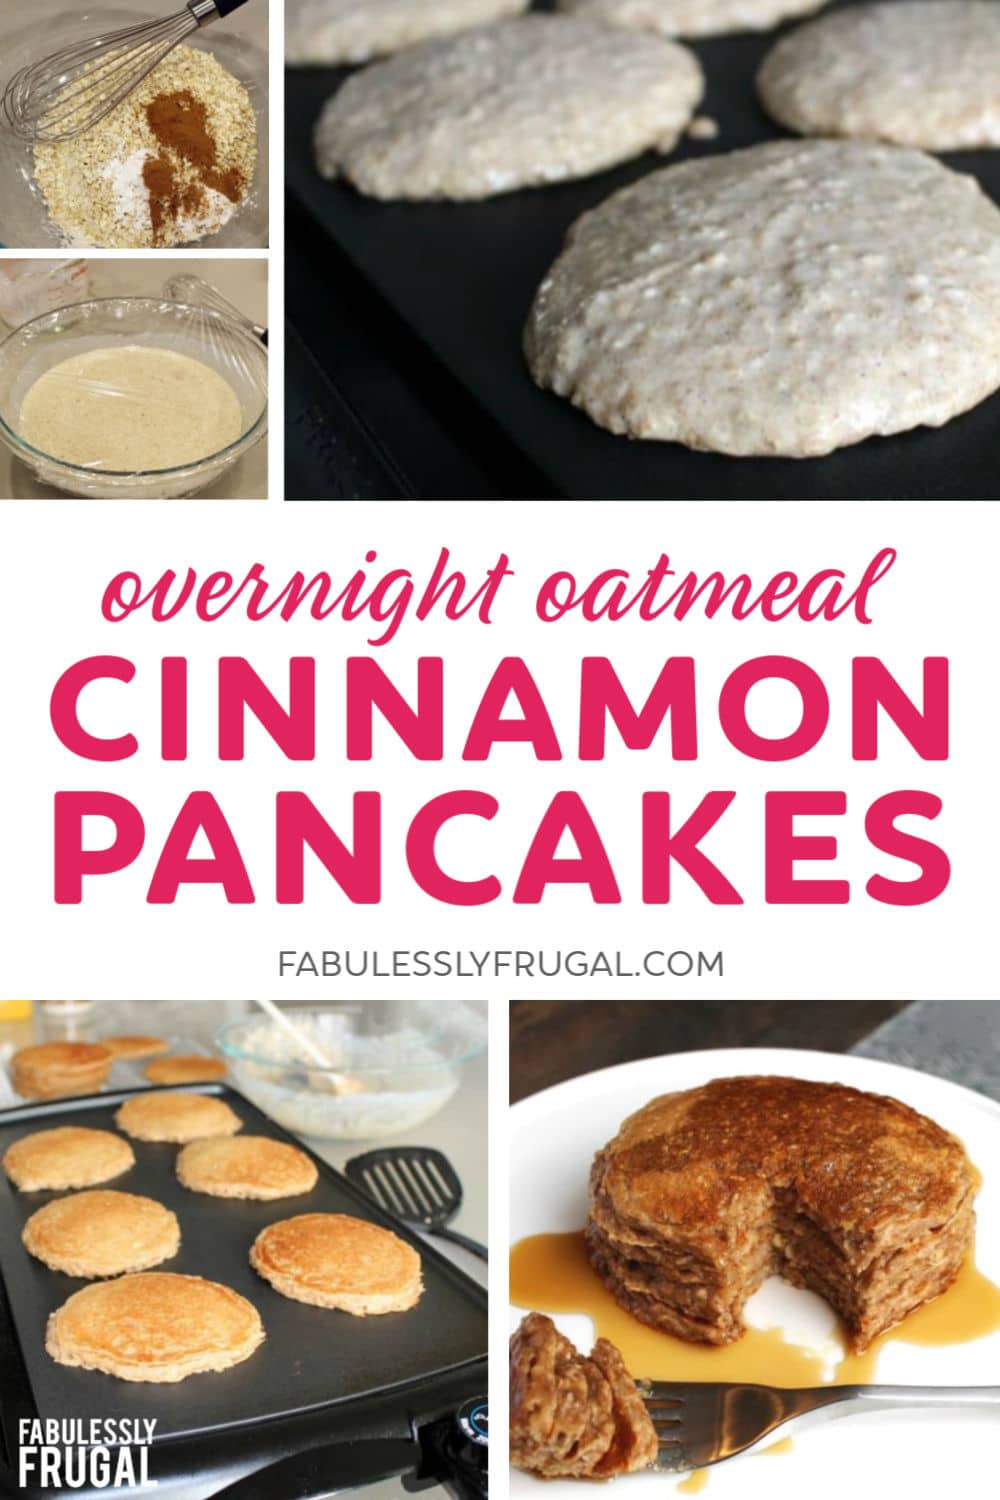 Overnight oatmeal cinnamon pancakes recipe